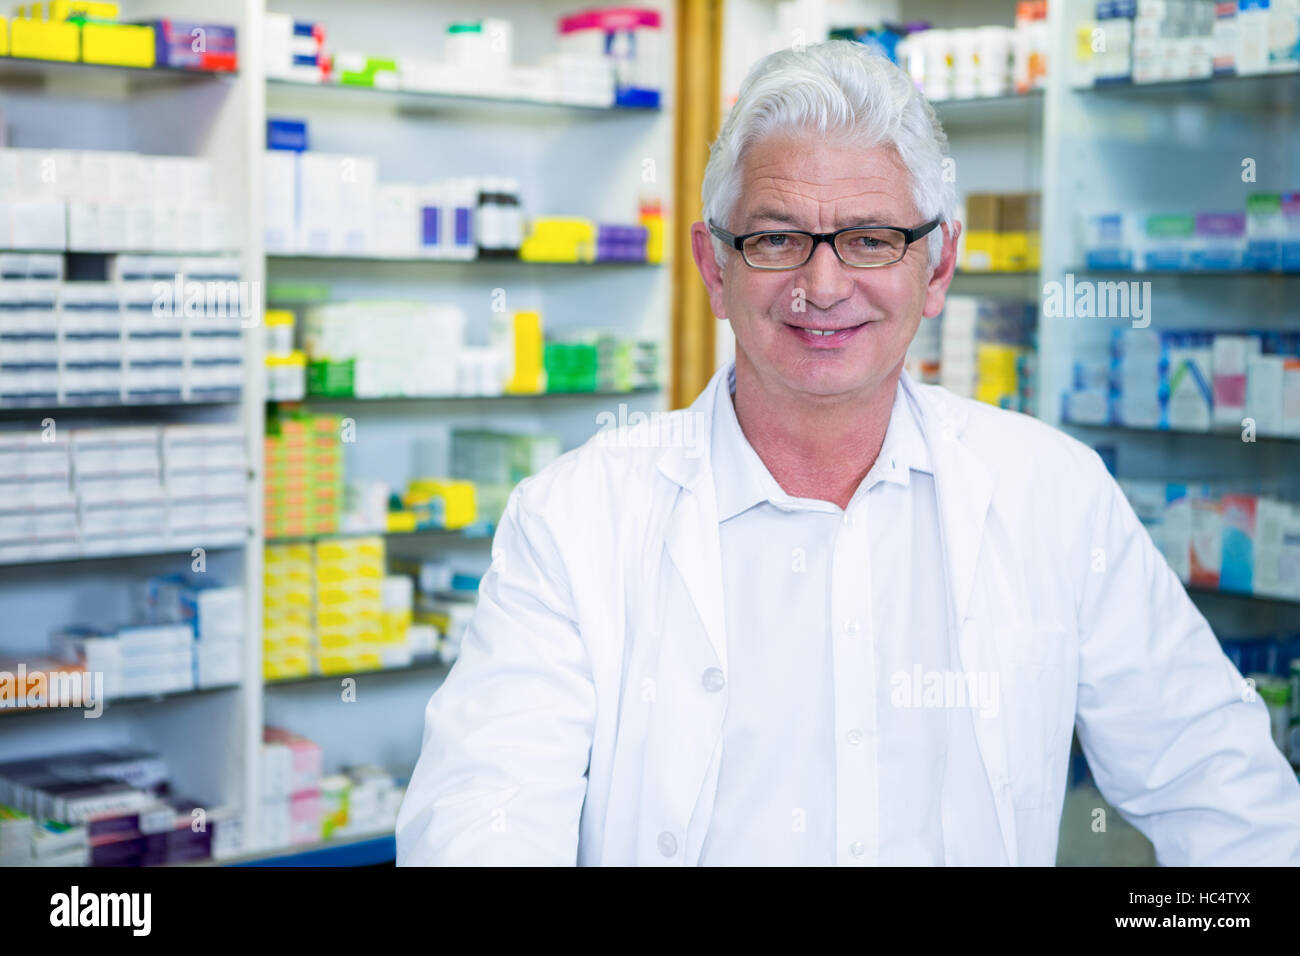 Pharmacien in lab coat Banque D'Images